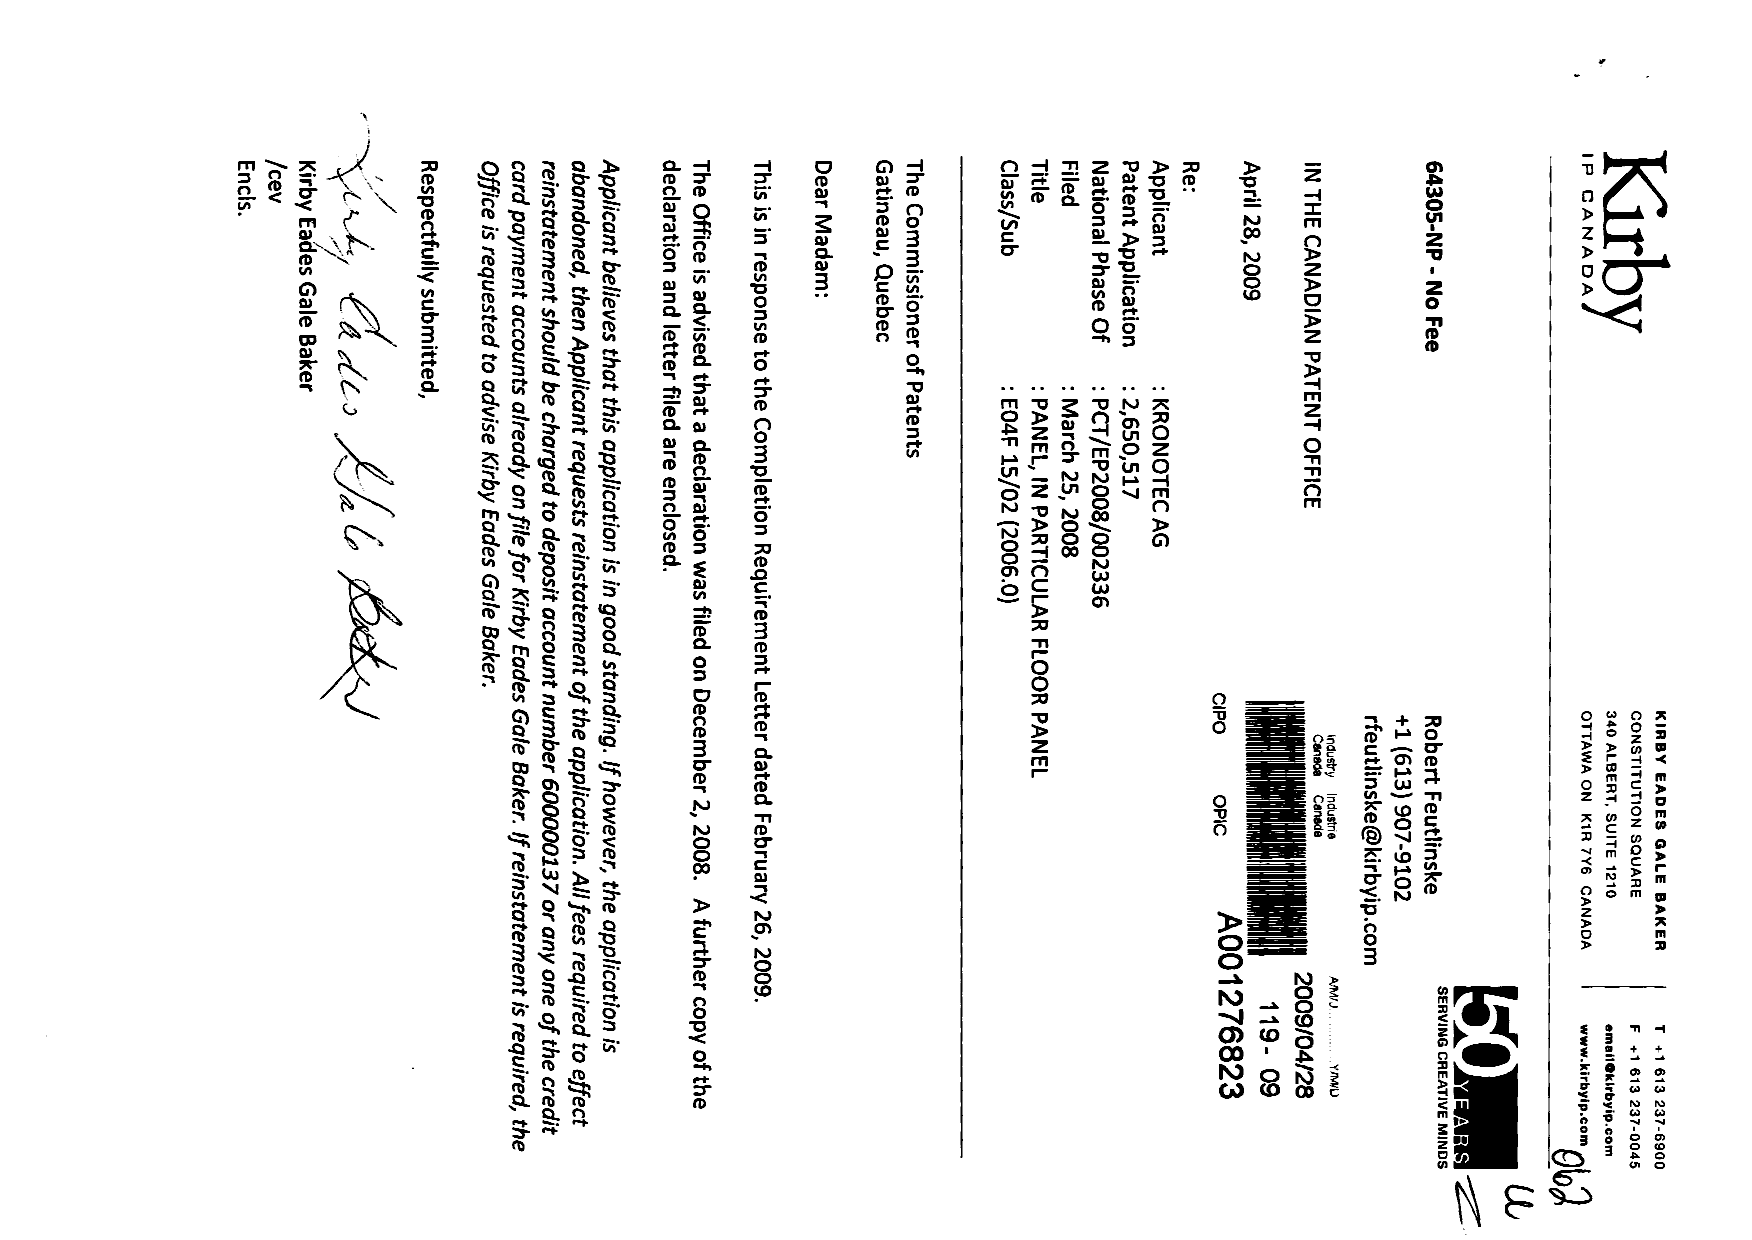 Canadian Patent Document 2650517. Correspondence 20090428. Image 1 of 3